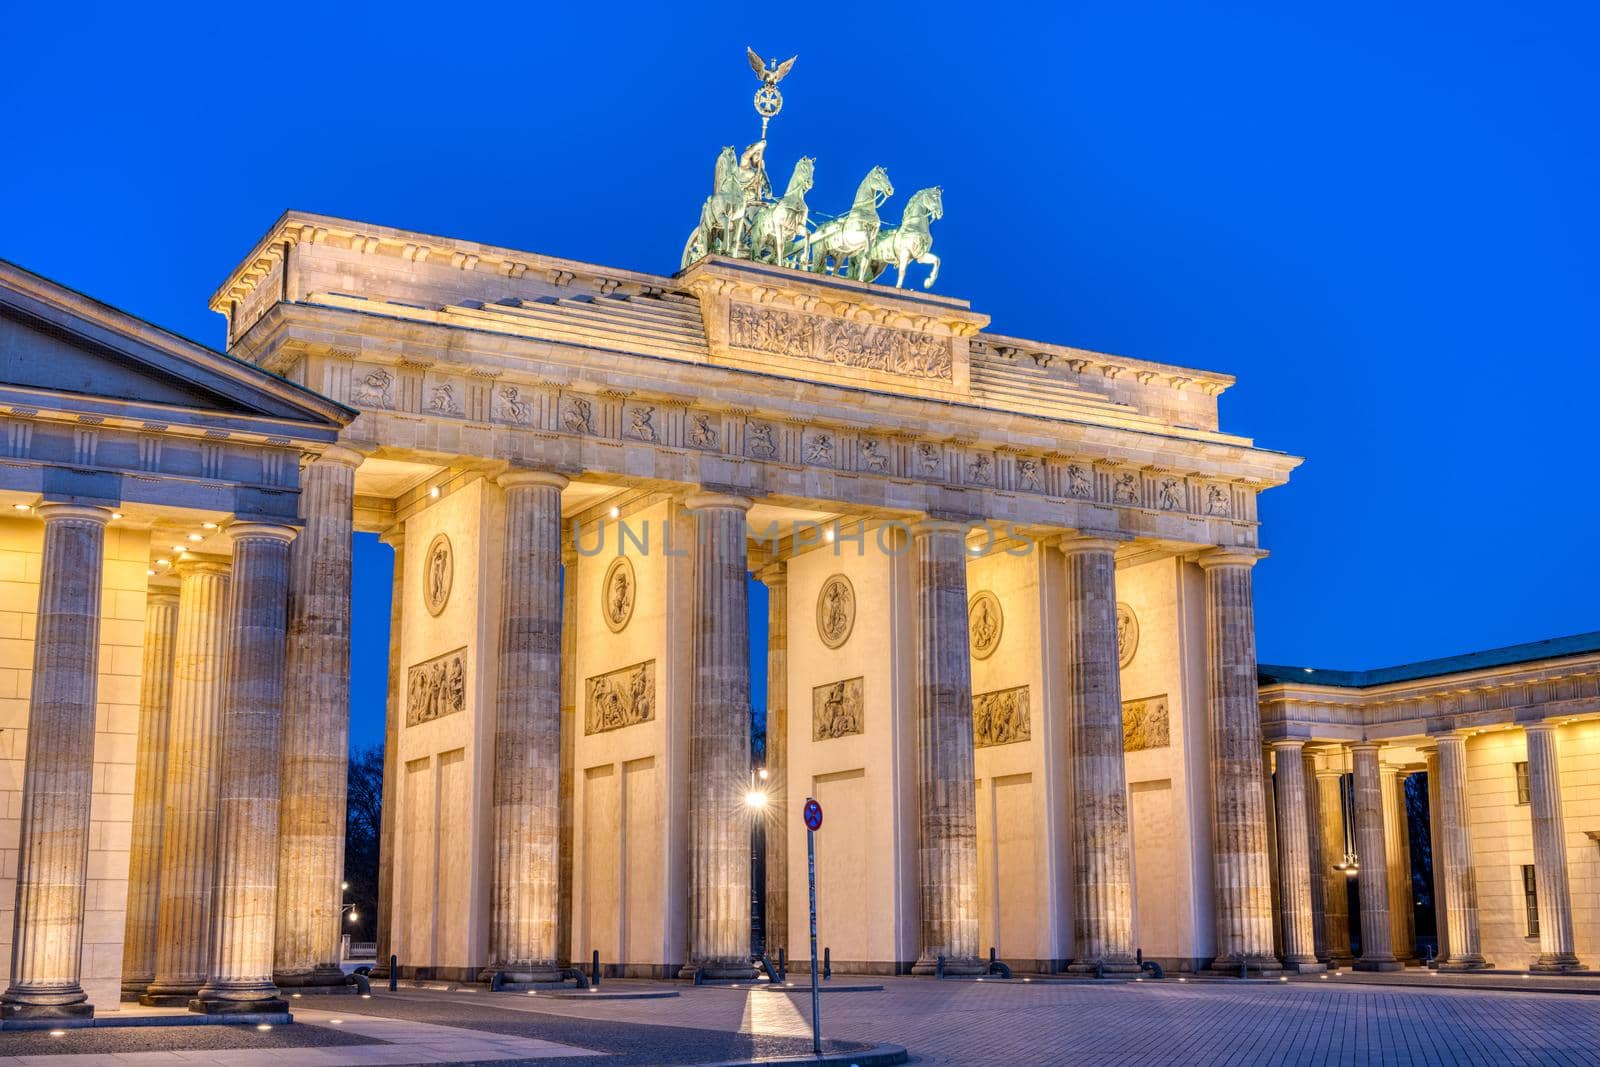 The famous illuminated Brandenburg Gate in Berlin by elxeneize